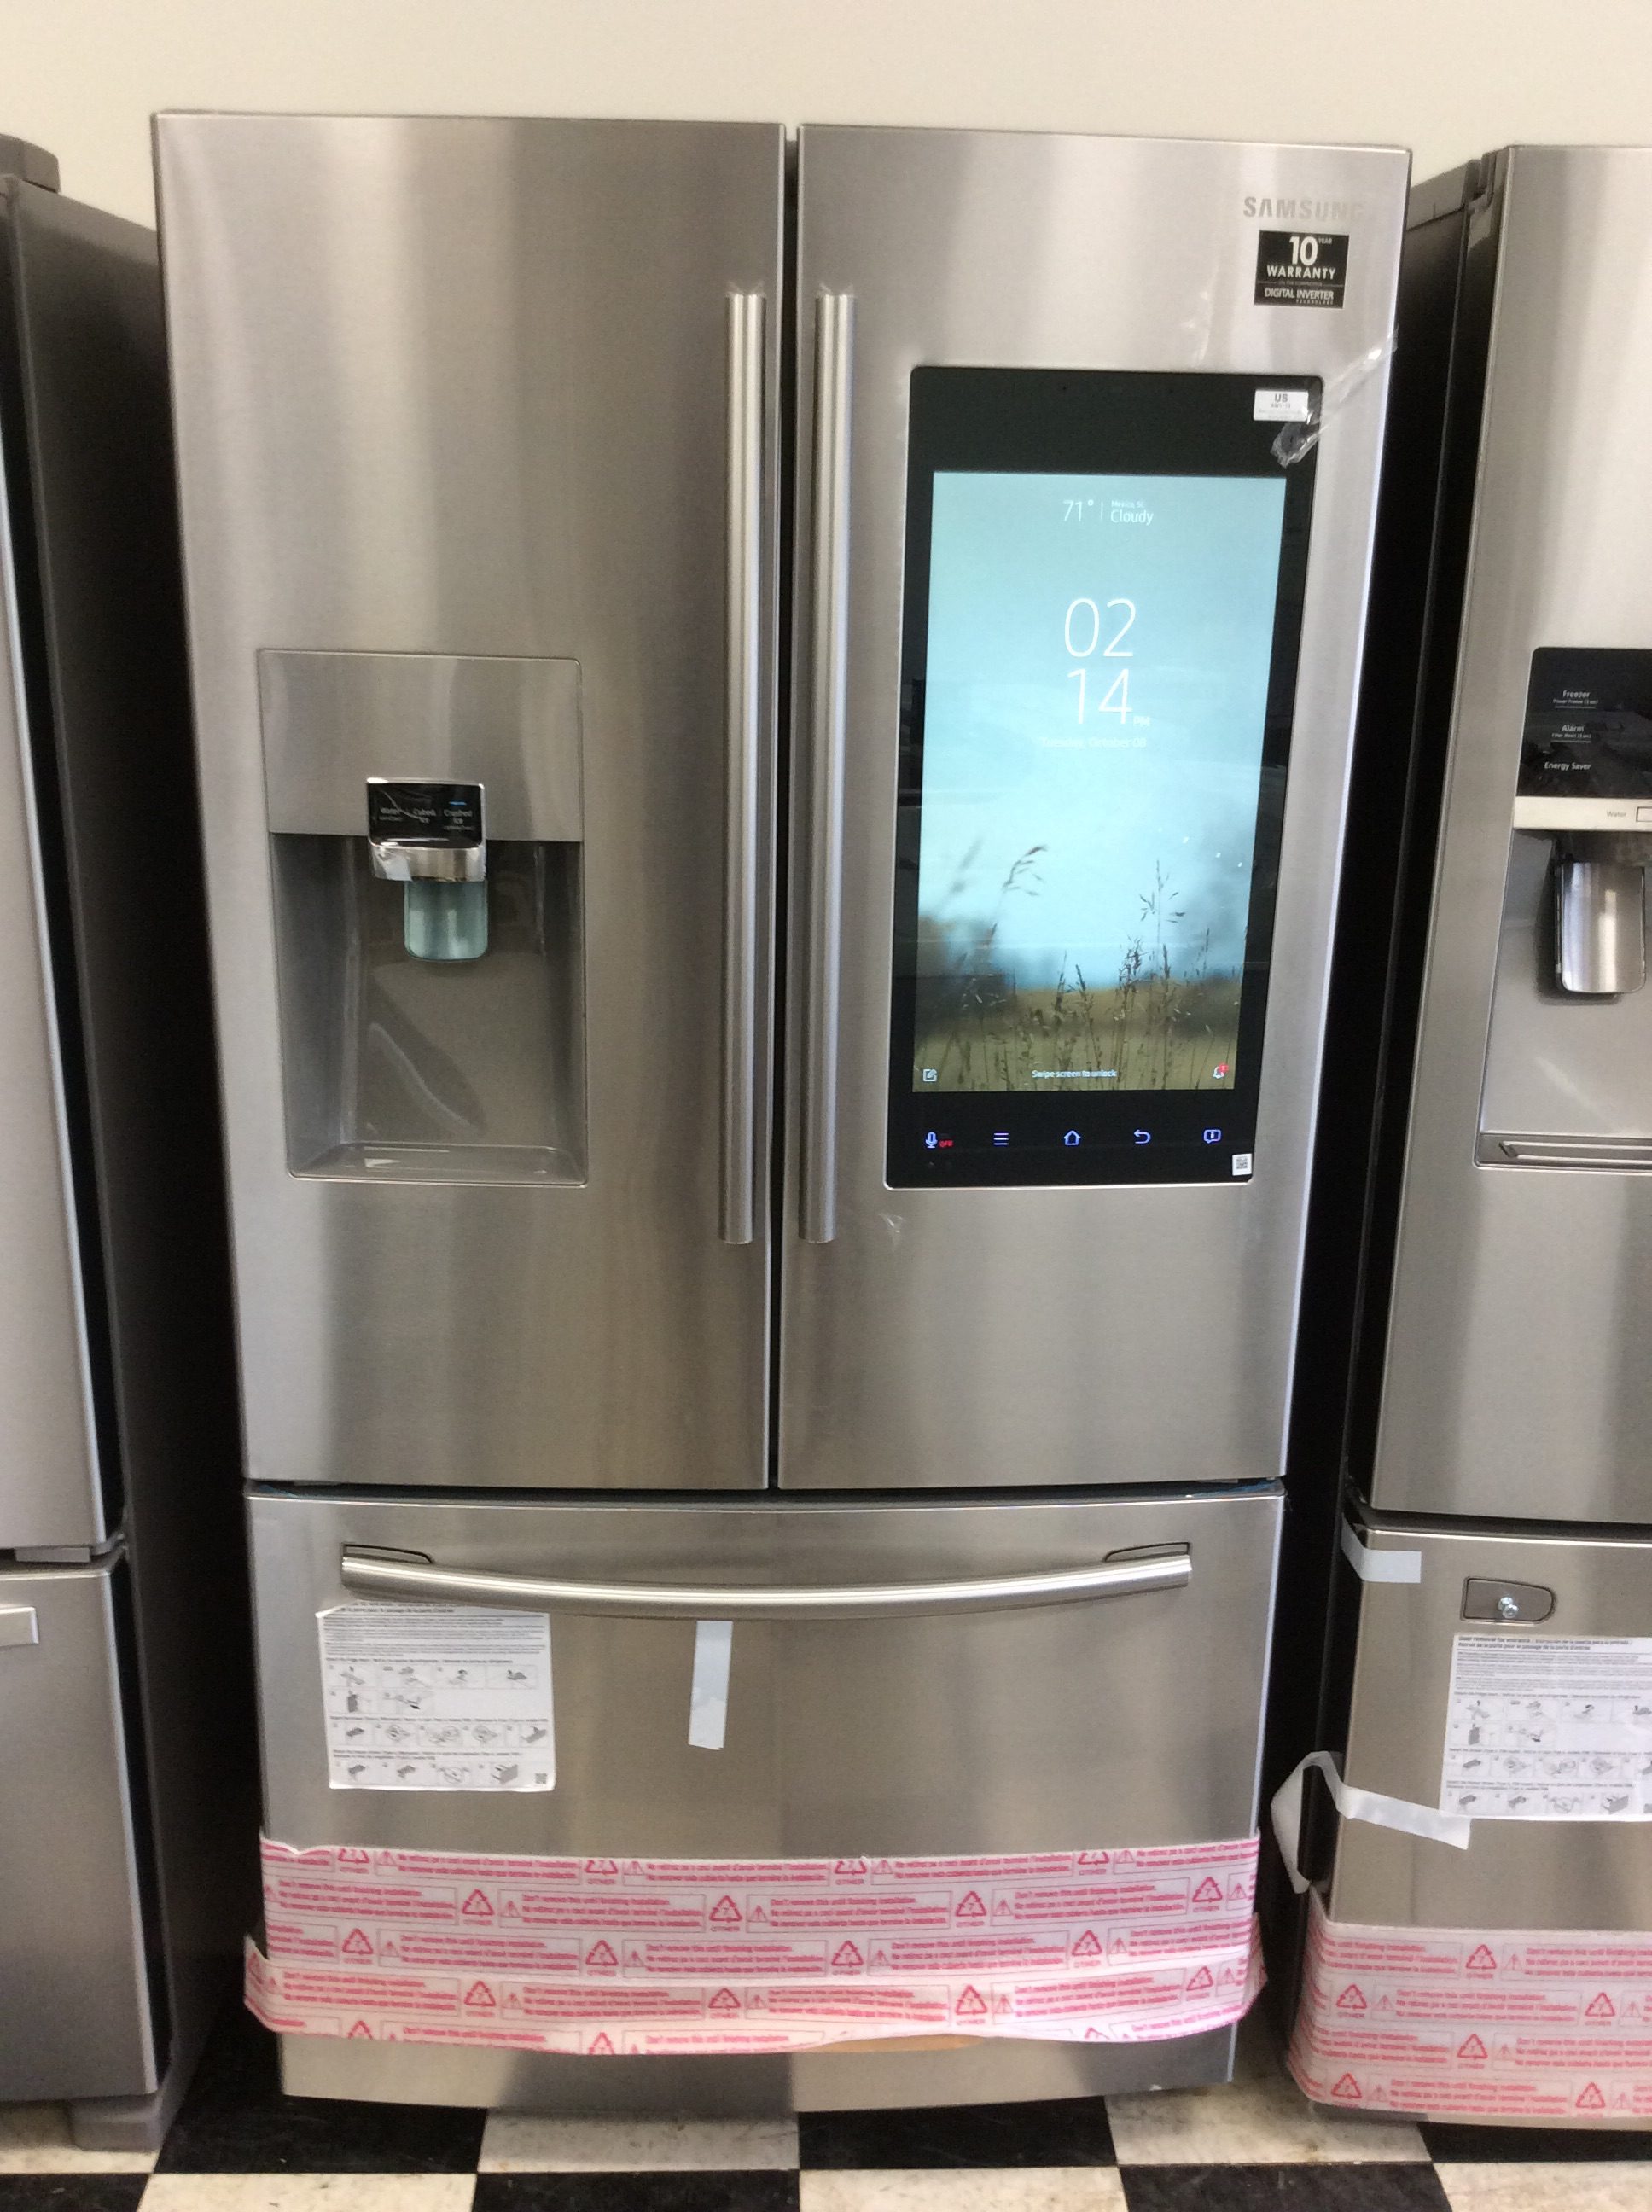 Samsung French door refrigerator 21.6 cu. ft. RF220NCTASR - Sears